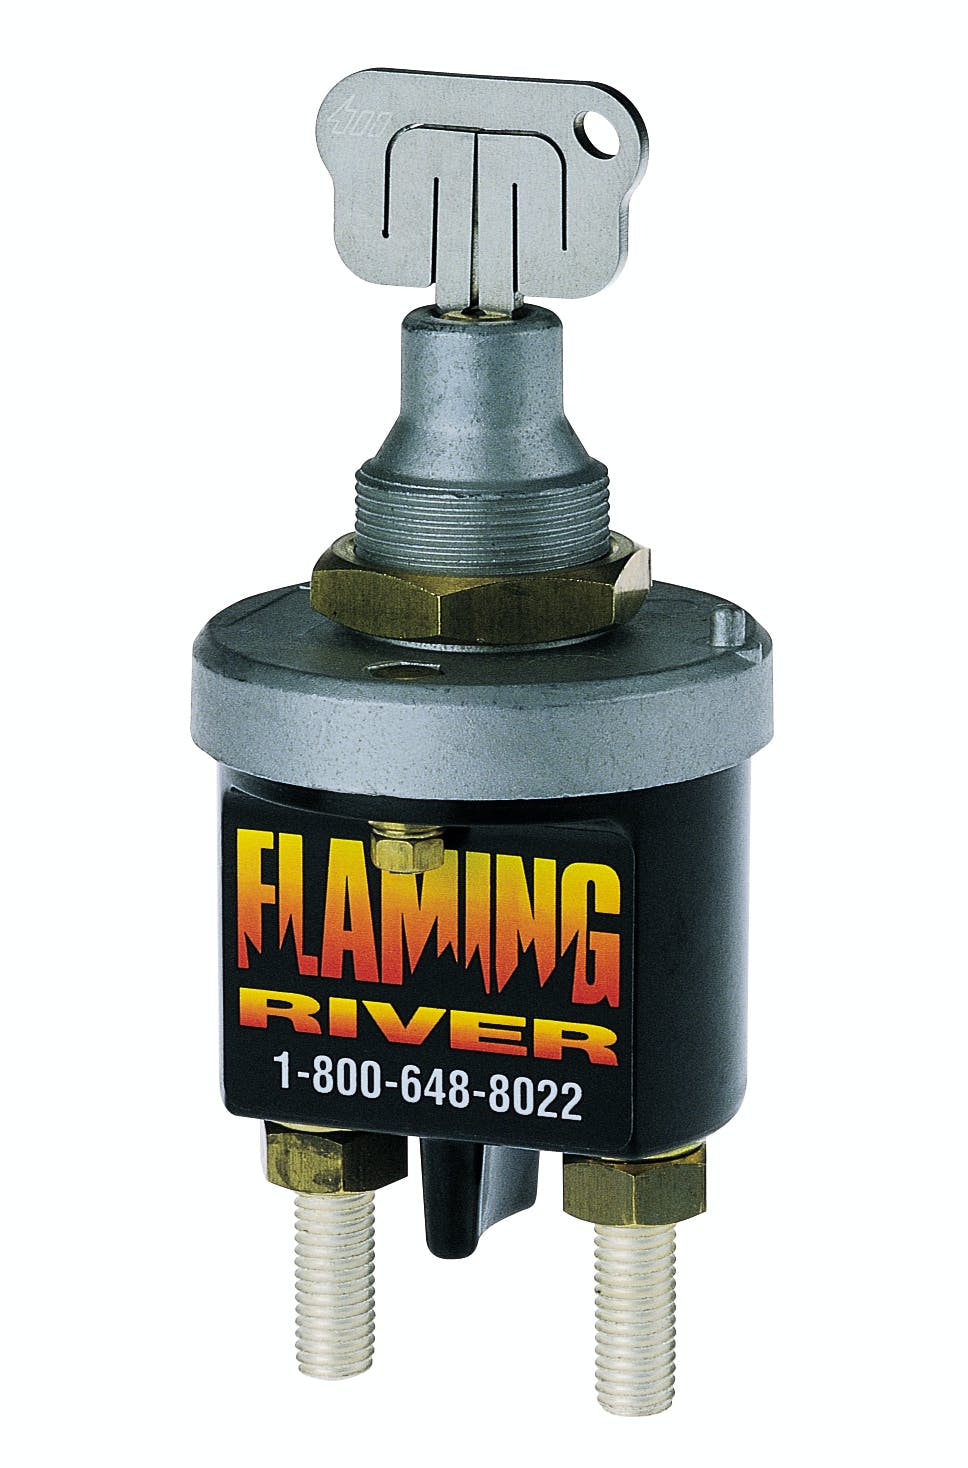 Flaming River-FR1009-1